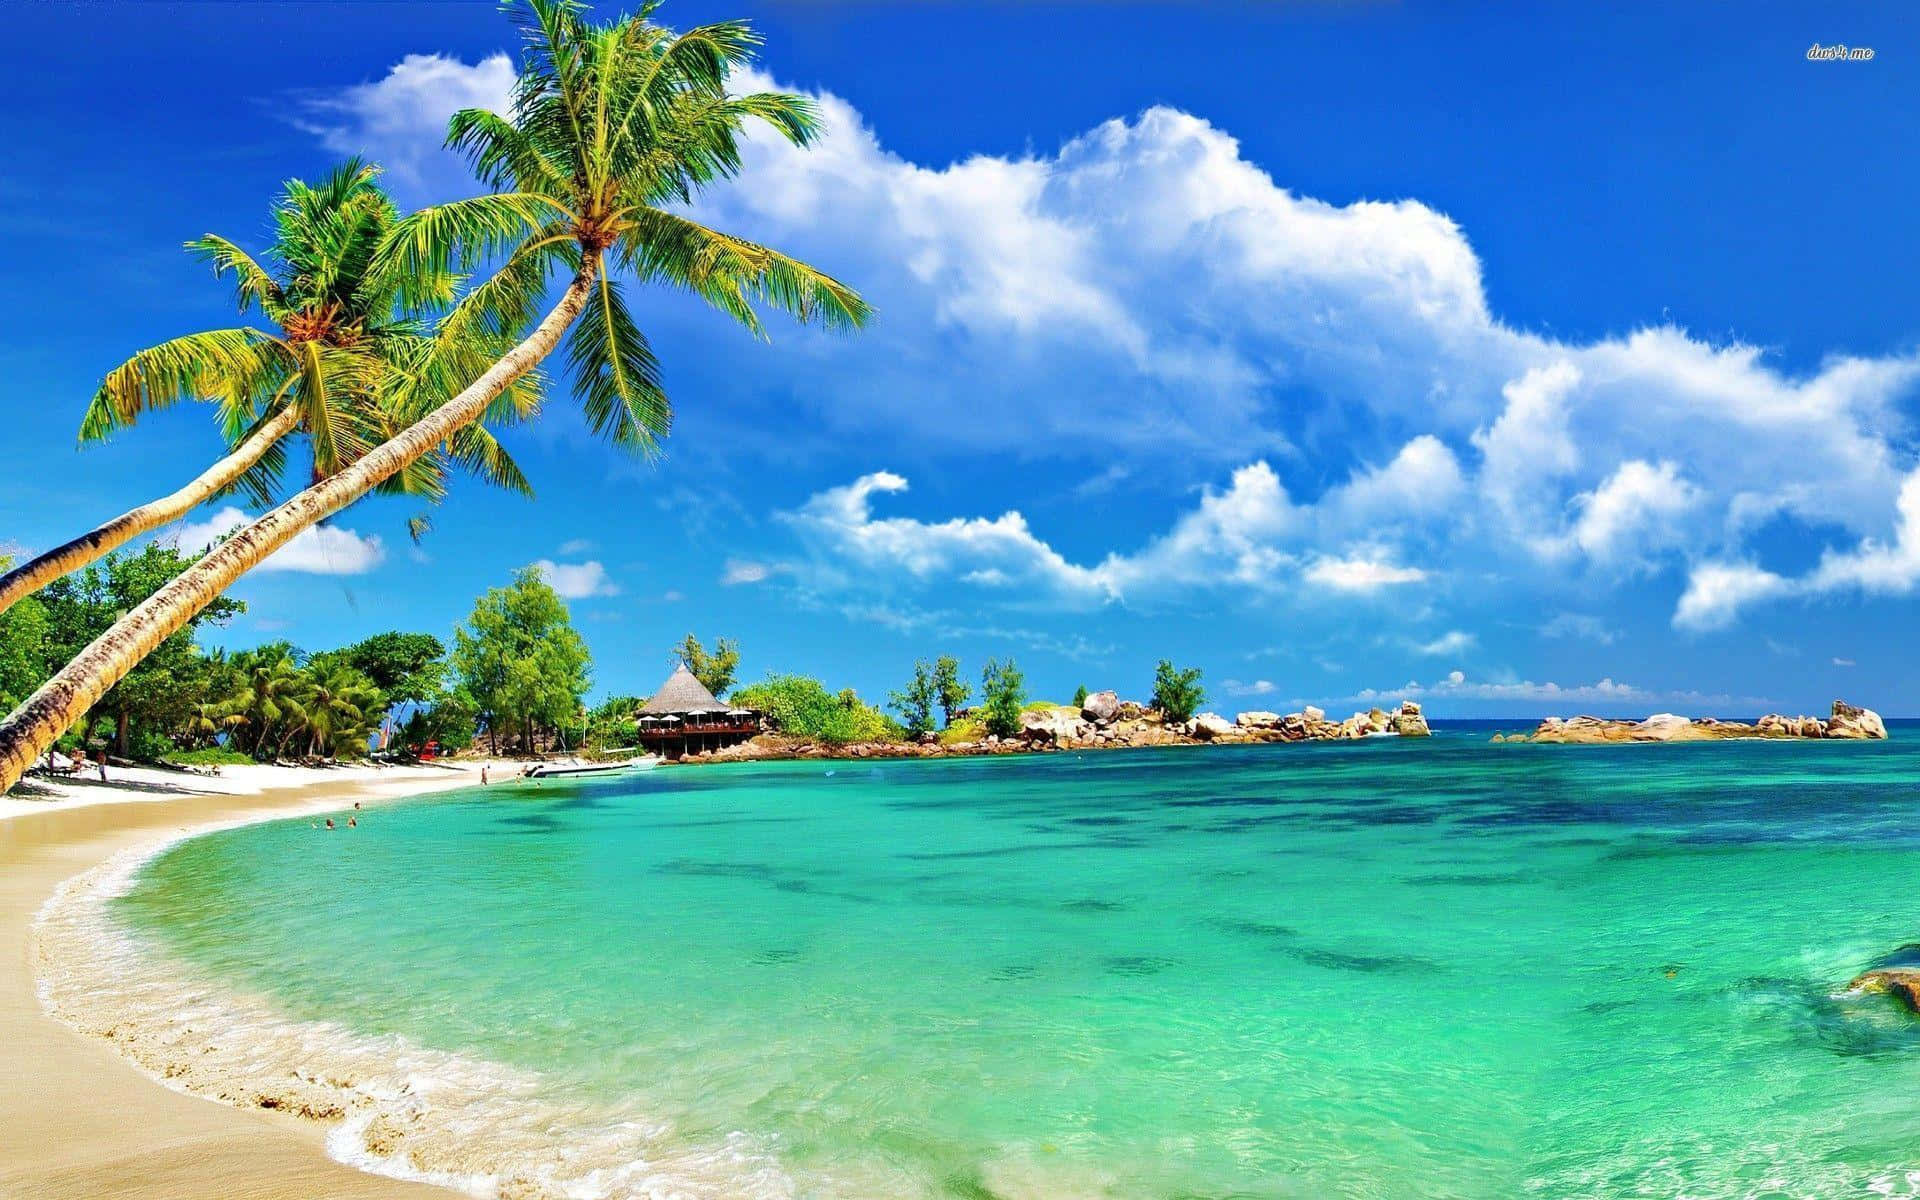 Enjoy the beautiful scenery of a tropical beach Wallpaper